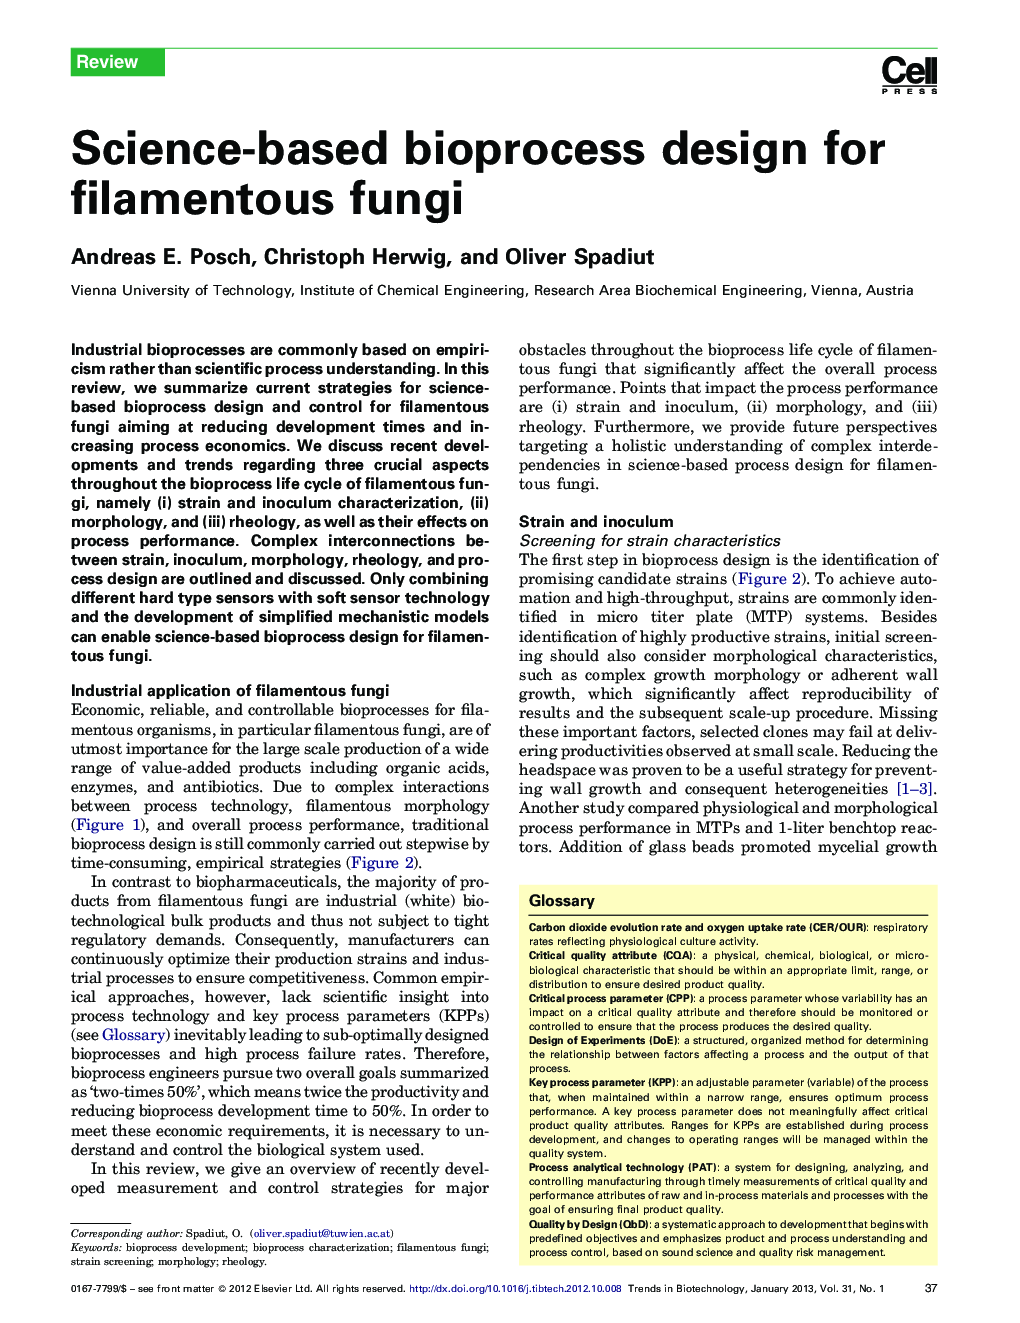 Science-based bioprocess design for filamentous fungi